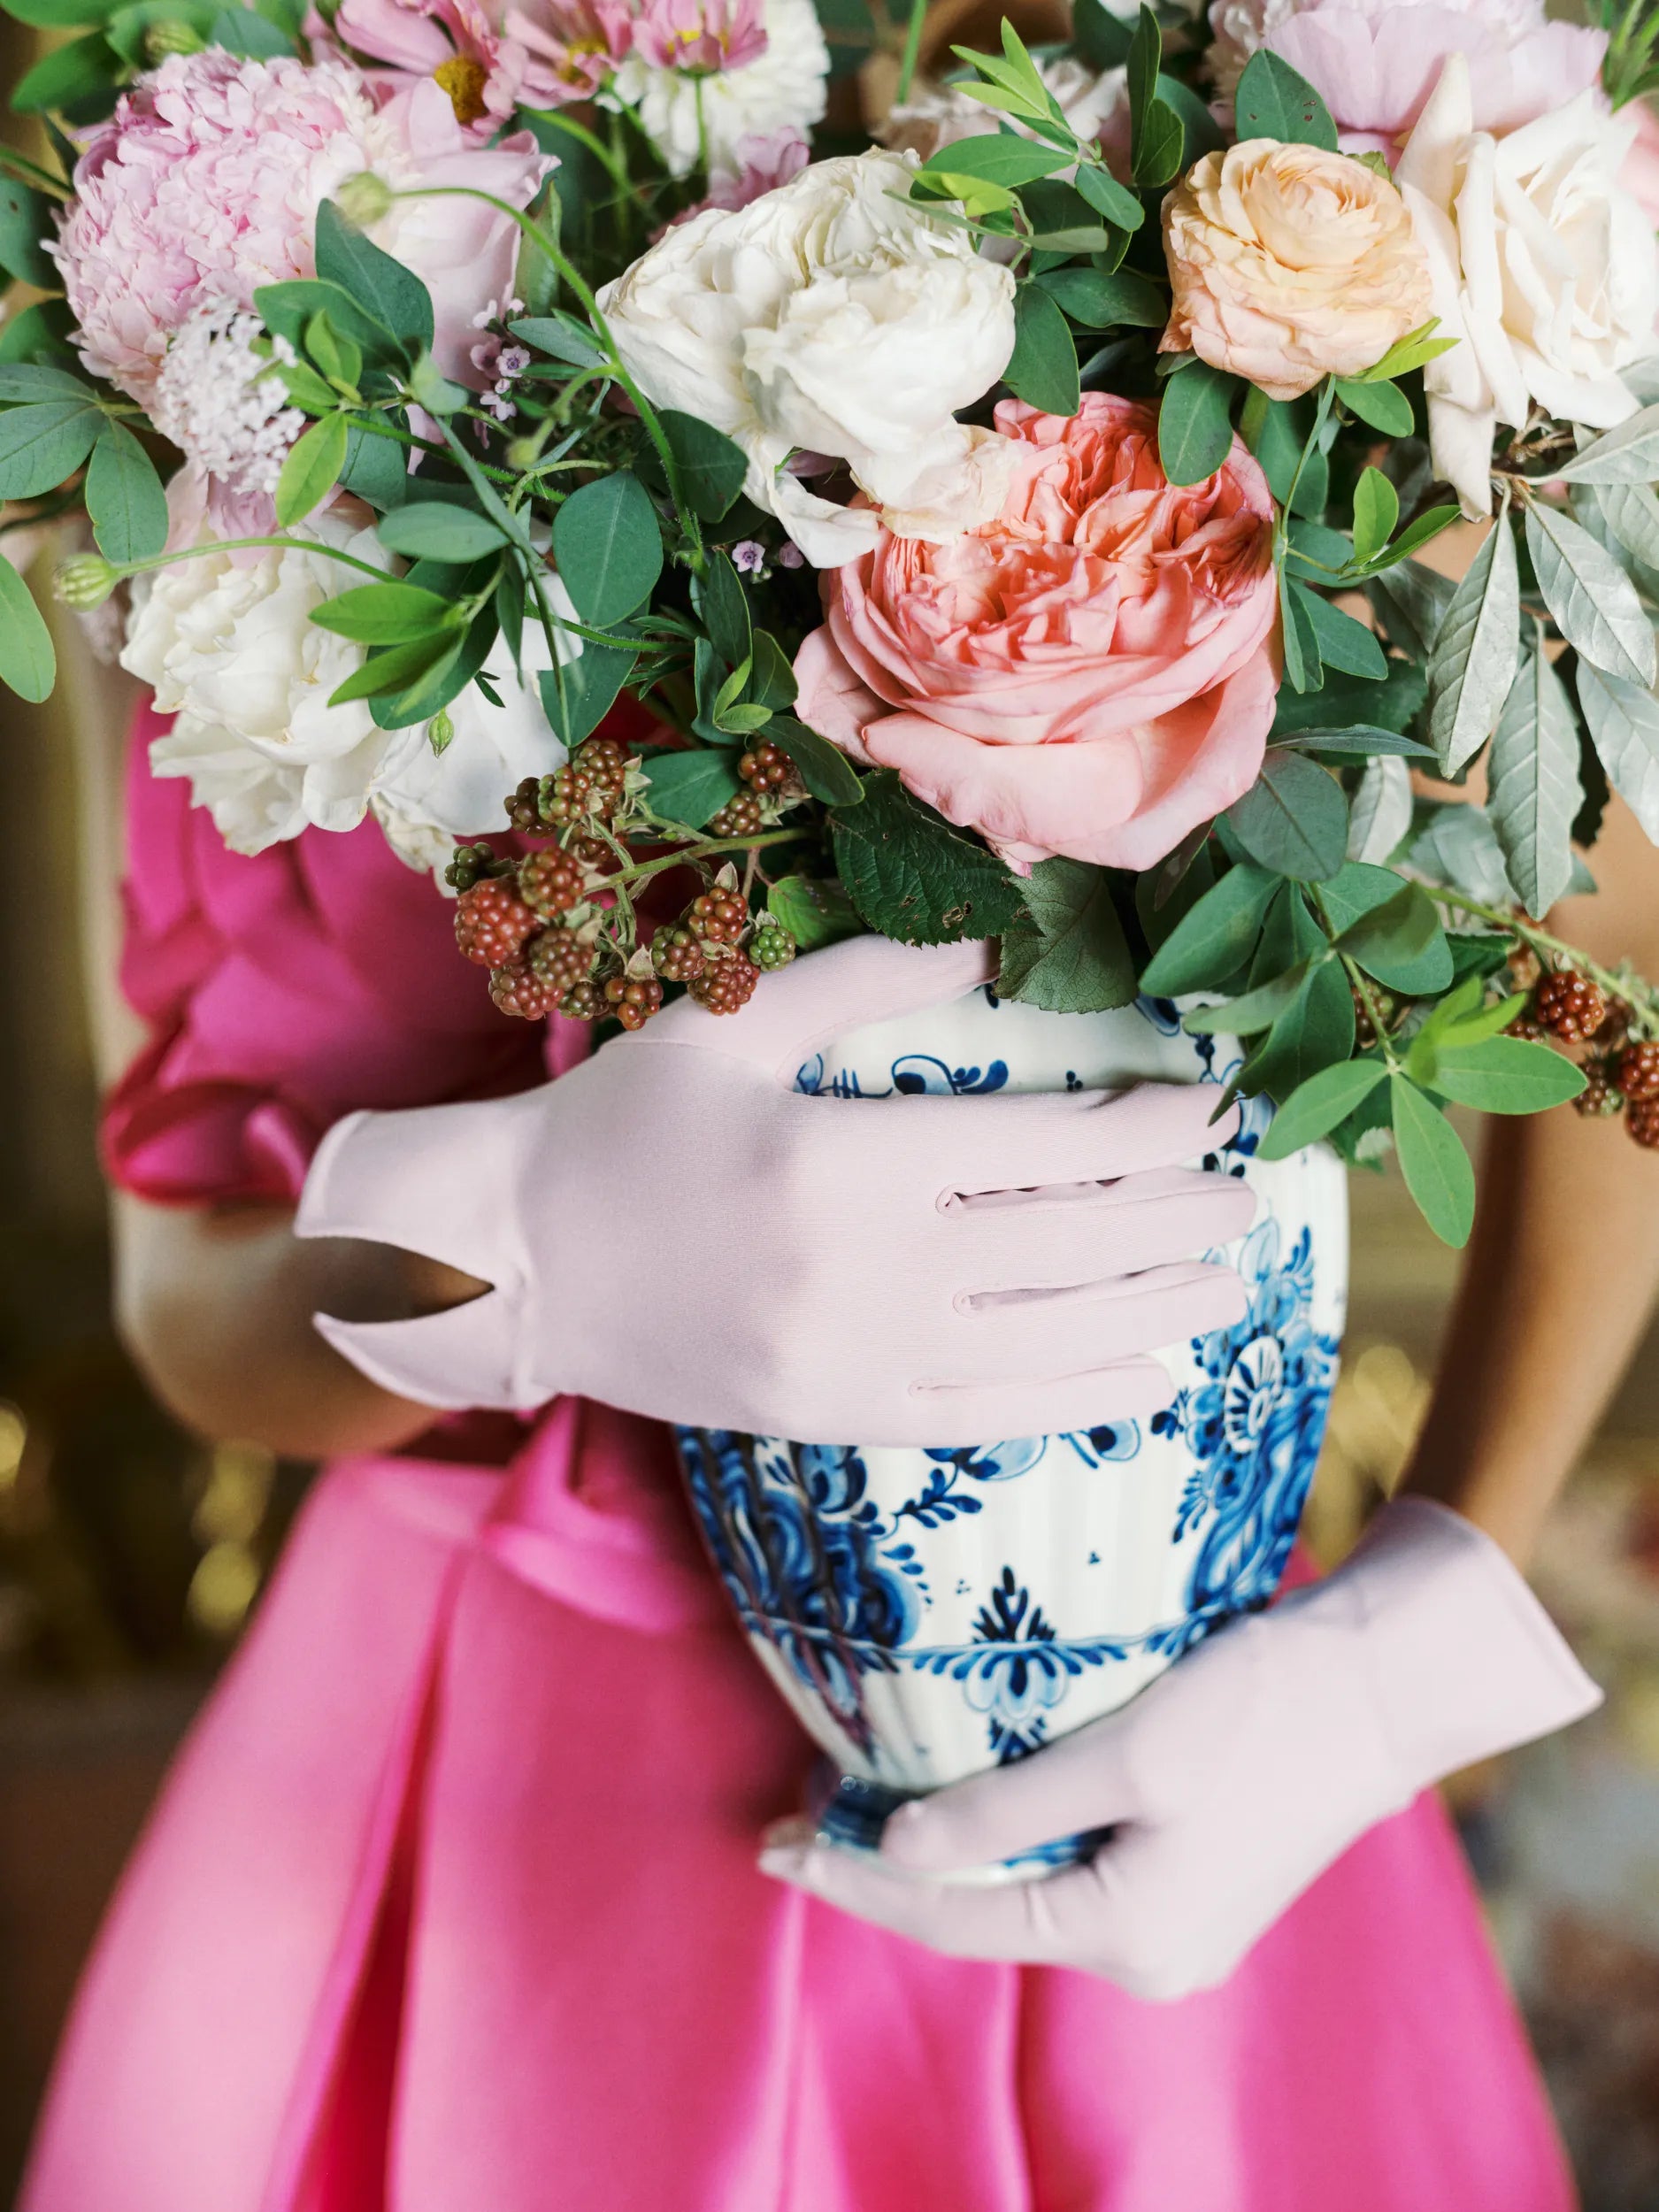 Woman wearing light pink wrist gloves holding large vase of flowers.